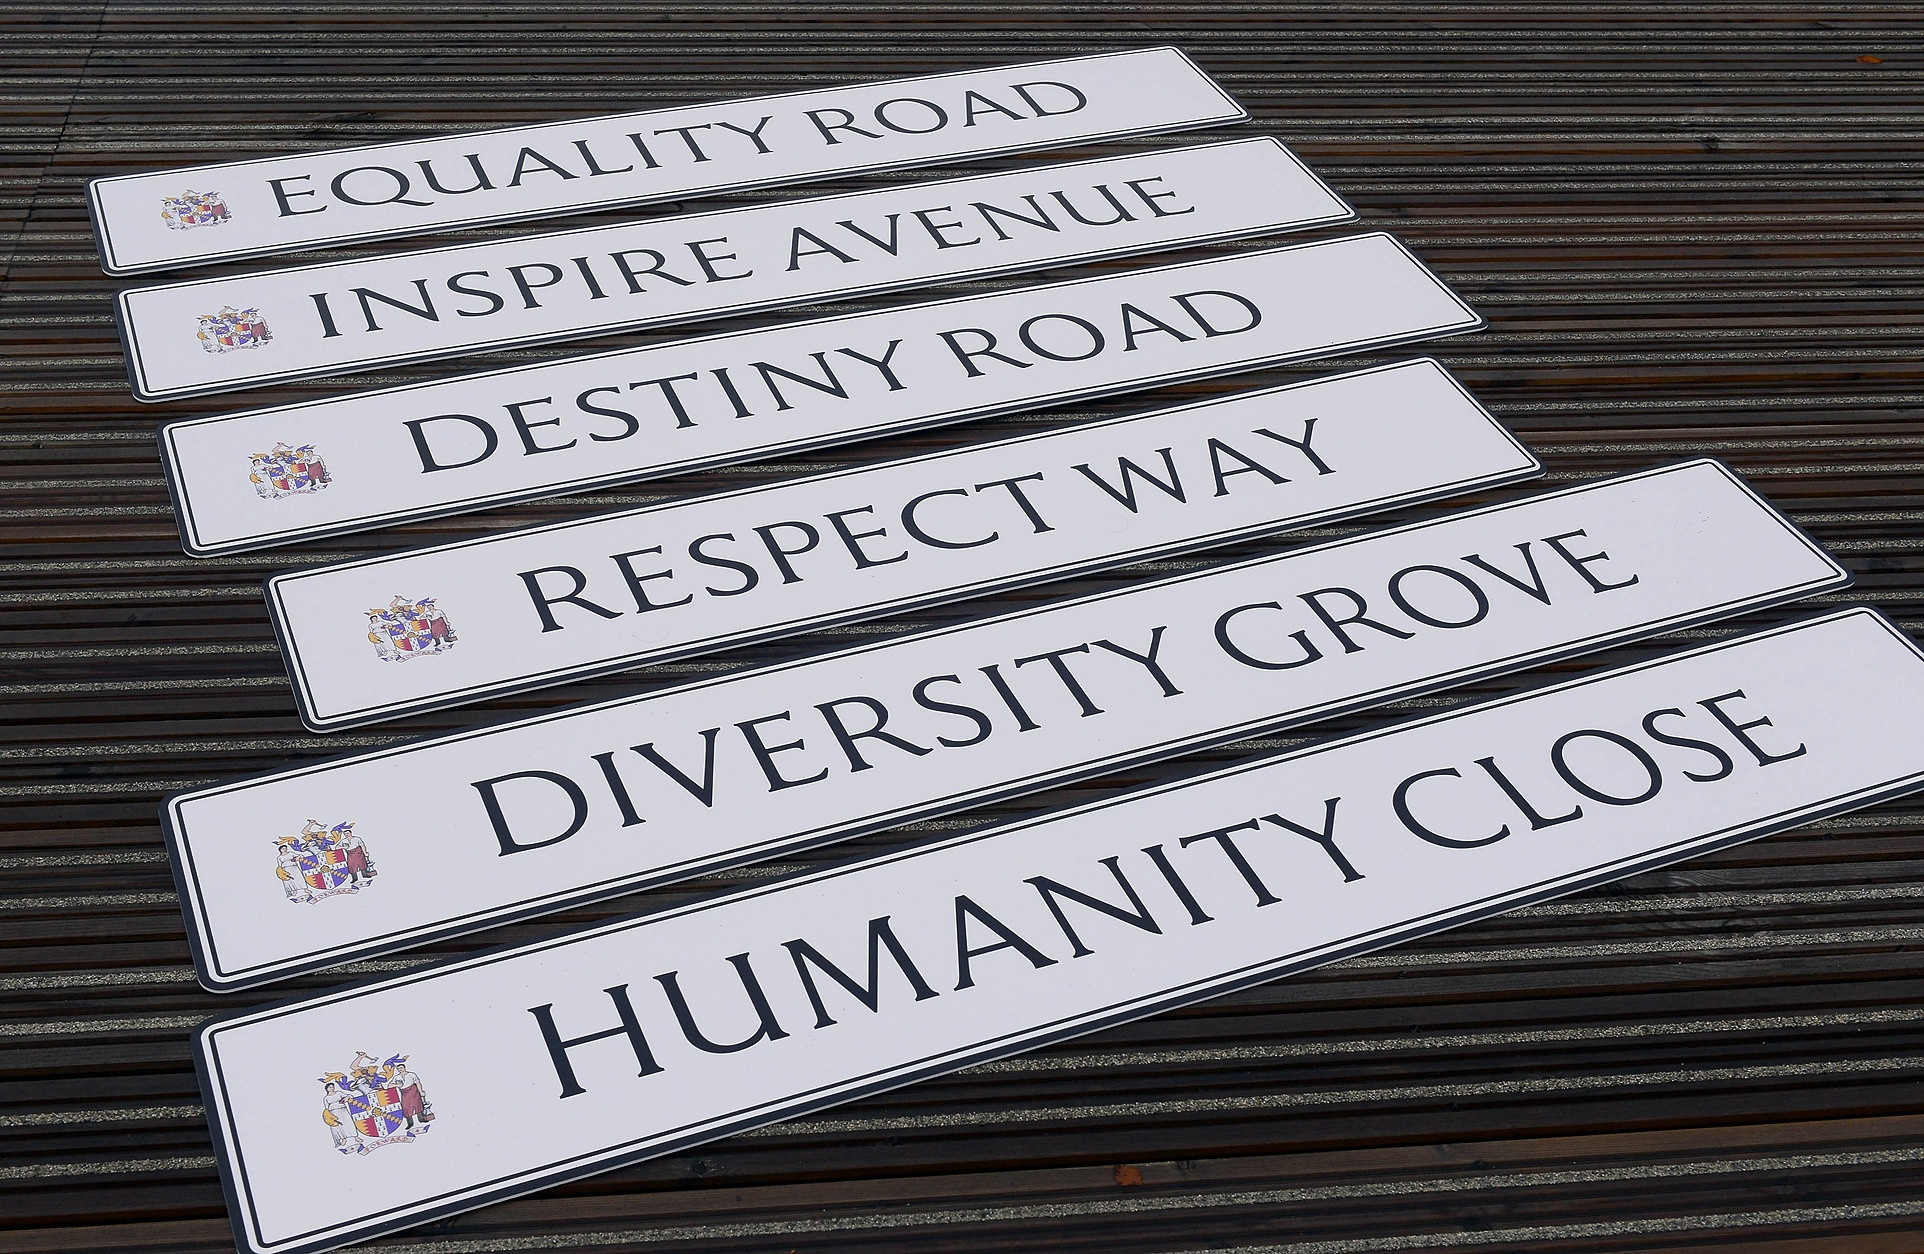 Commonwealth Sport Movement values inspire new street names in Birmingham